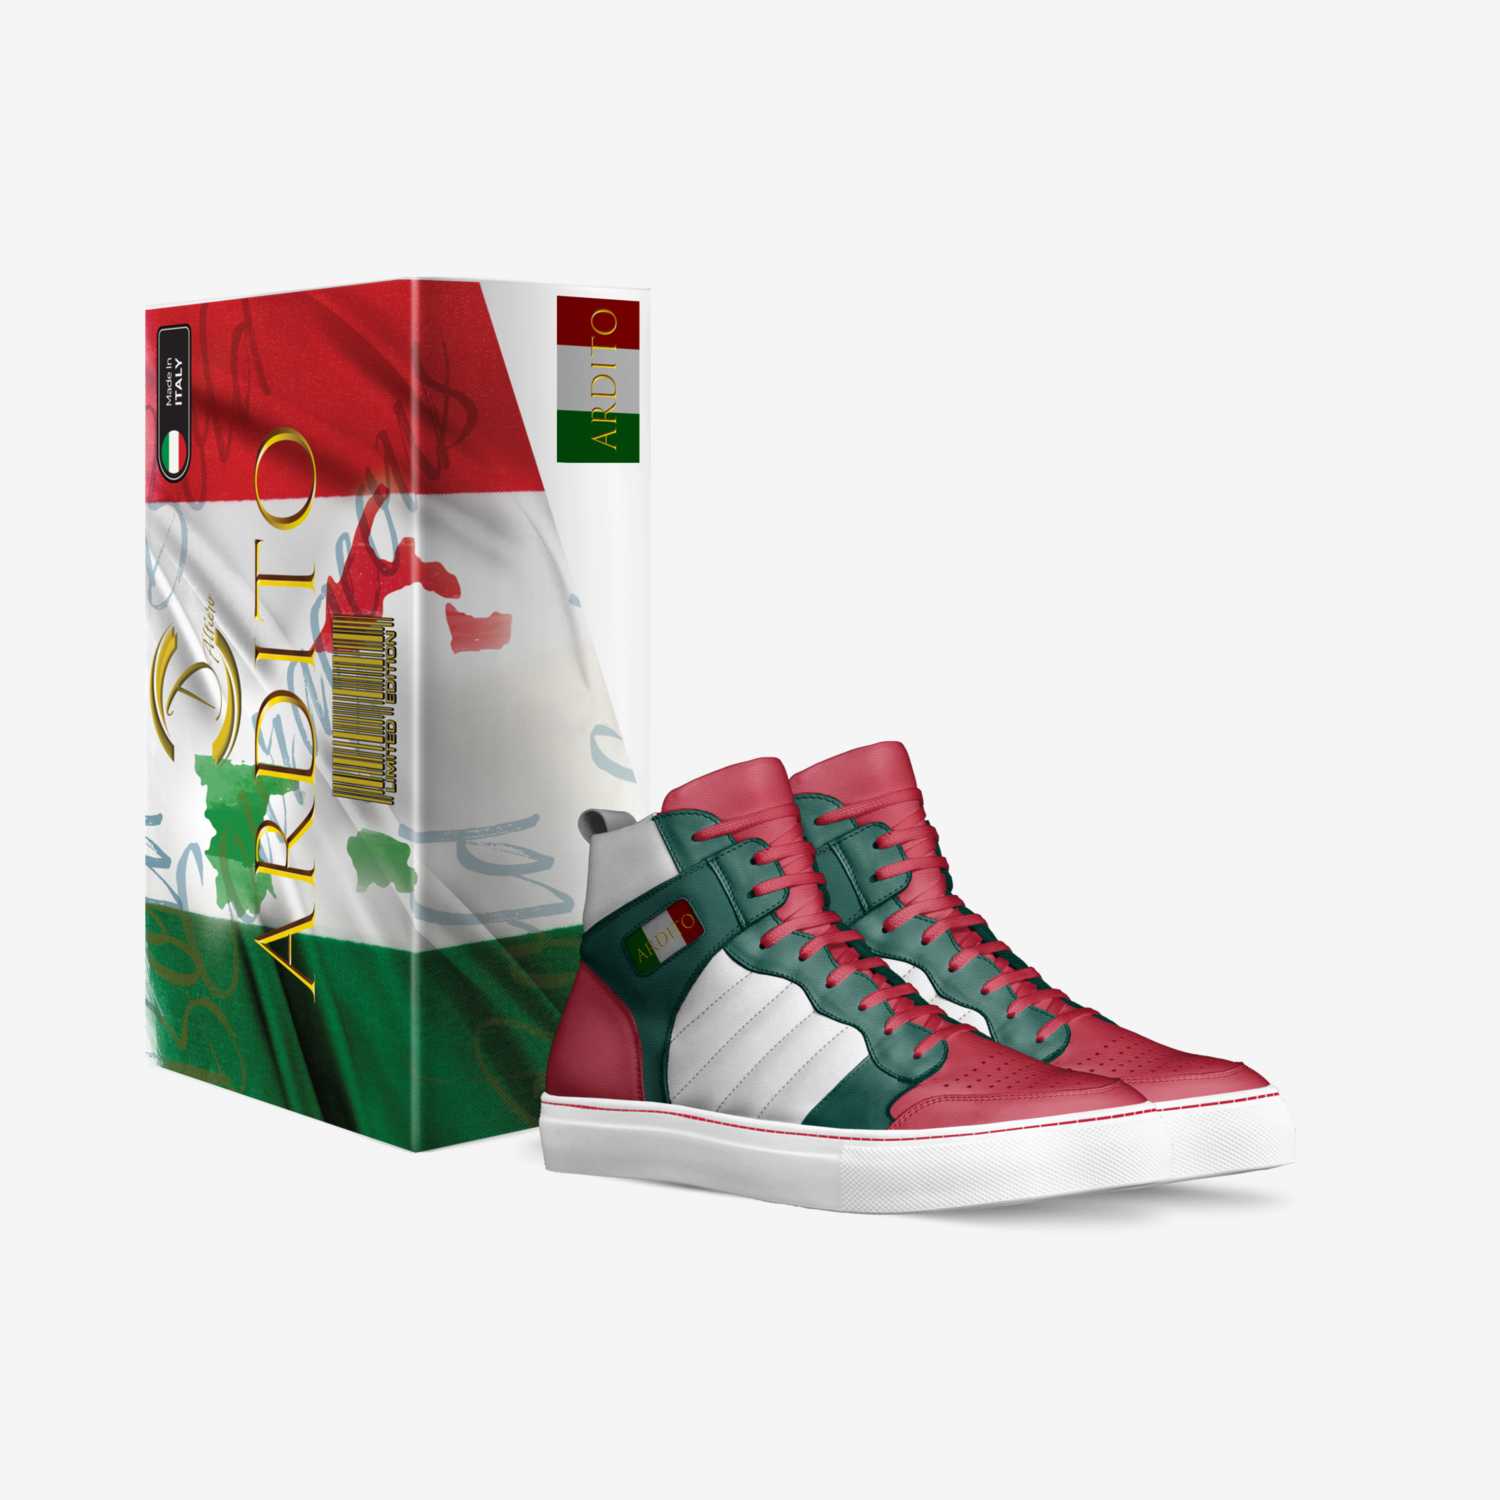 Dalfiero custom made in Italy shoes by Danny Alfiero | Box view